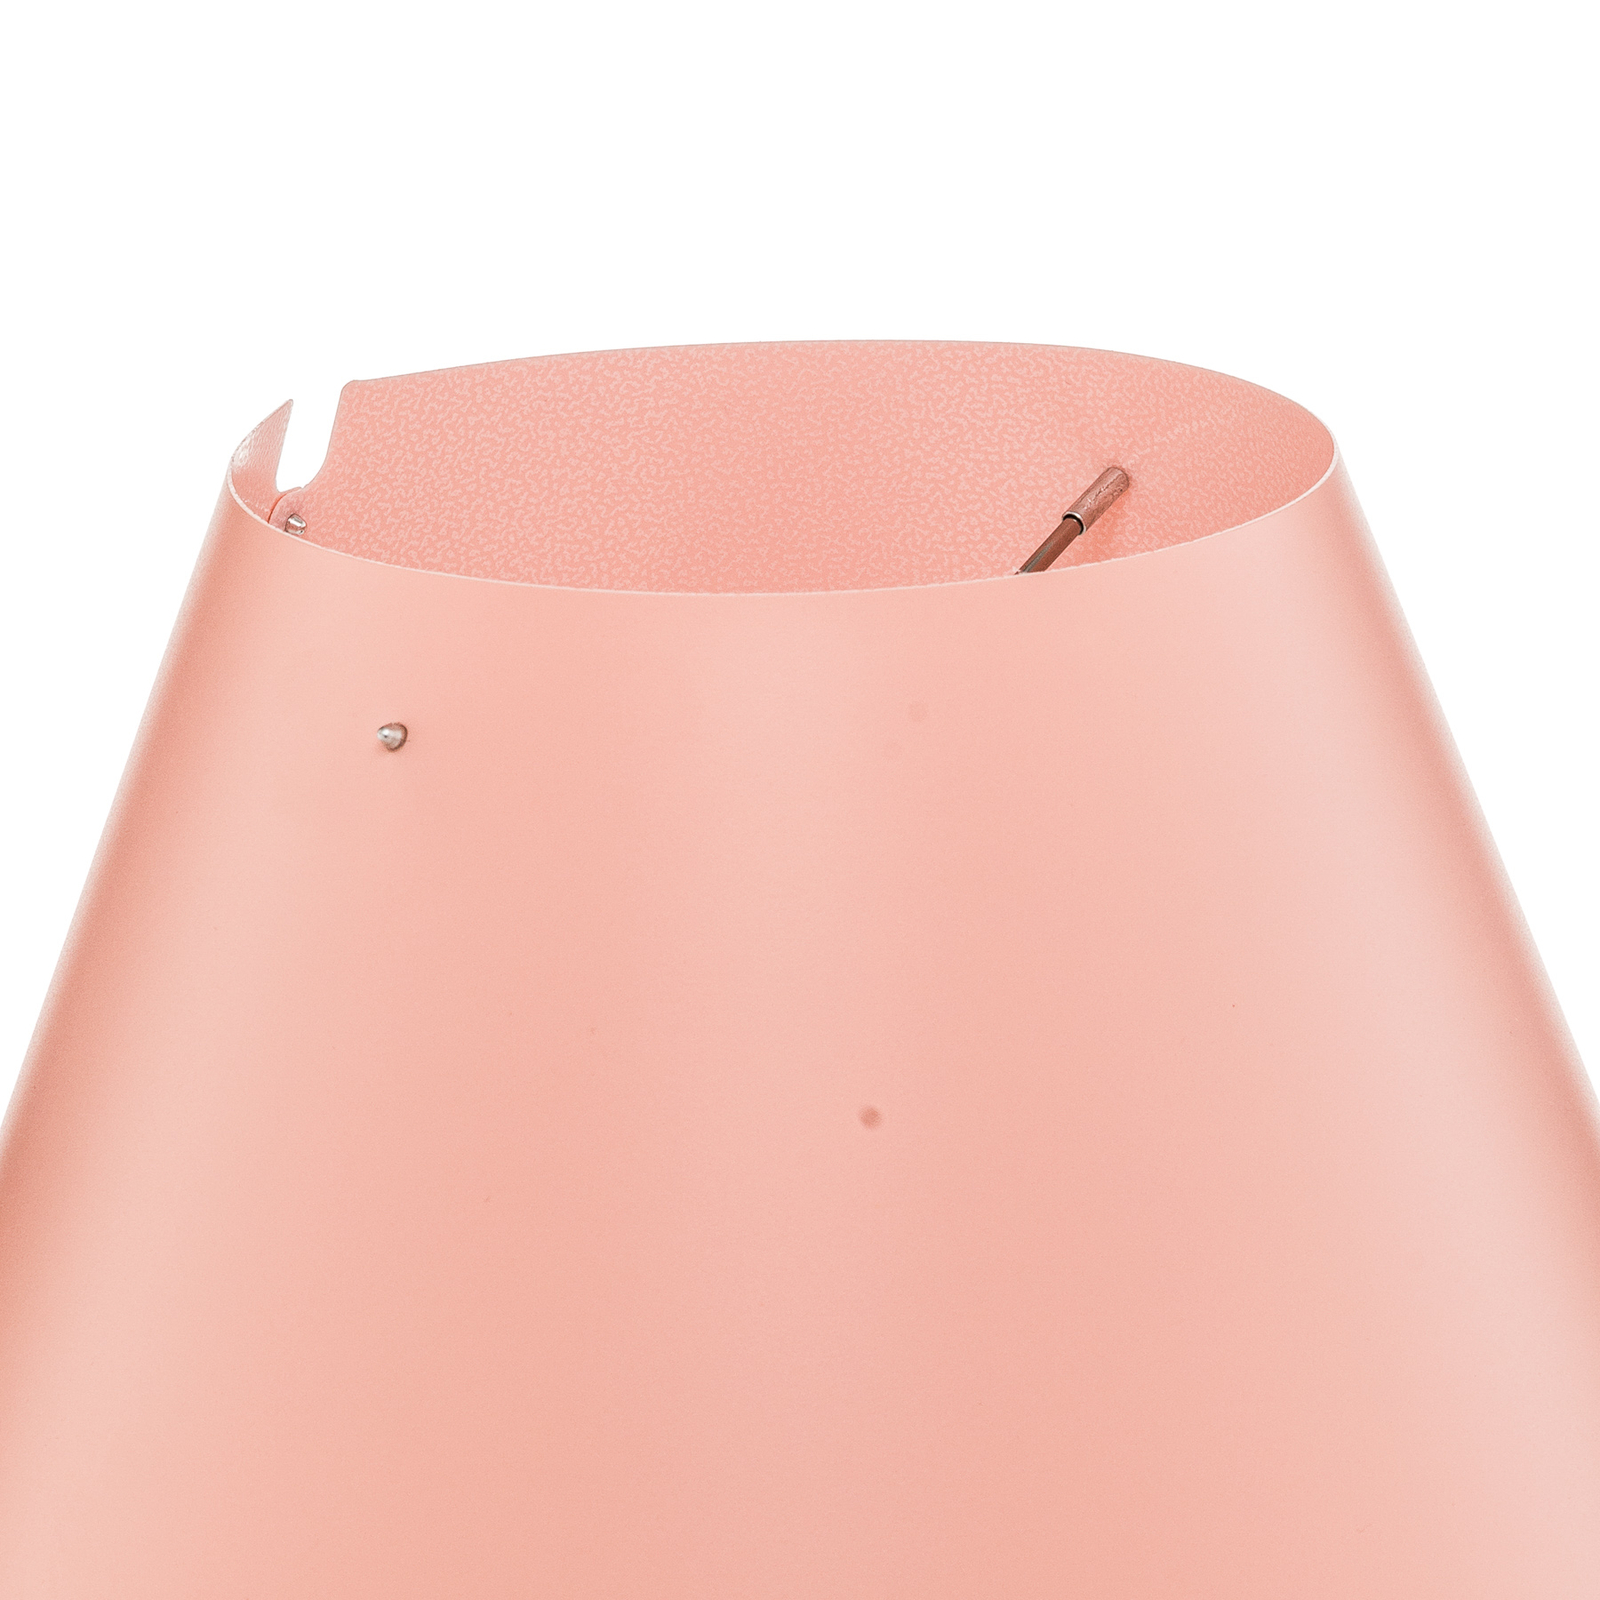 Luceplan Costanzina bordlampe alu, rosa